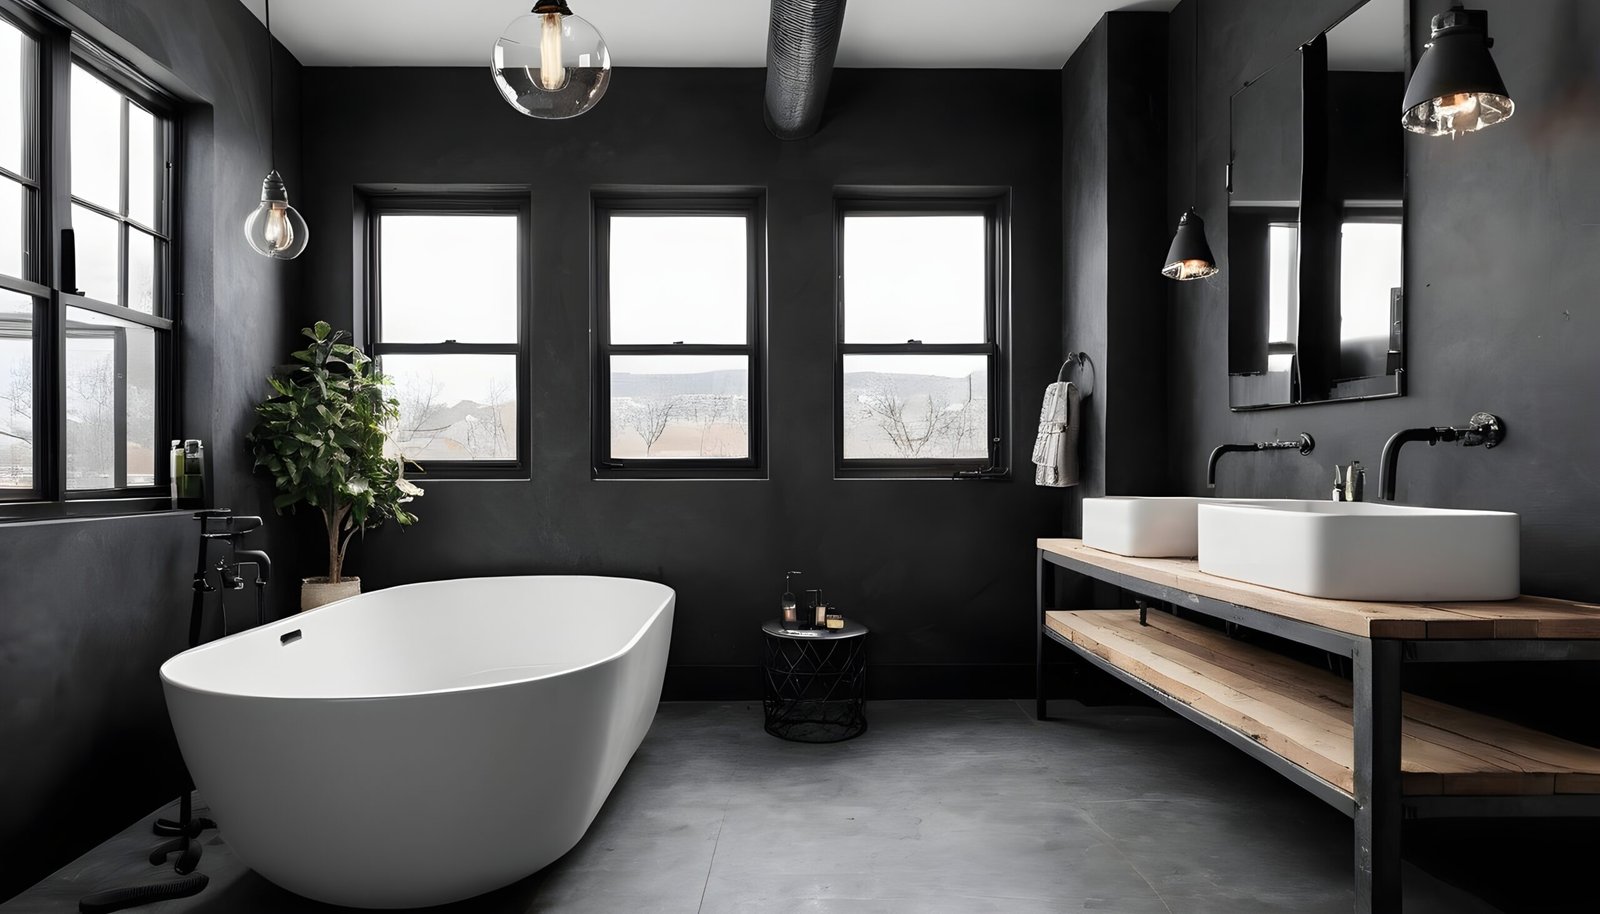 Industrial bathroom with black walls and floors.